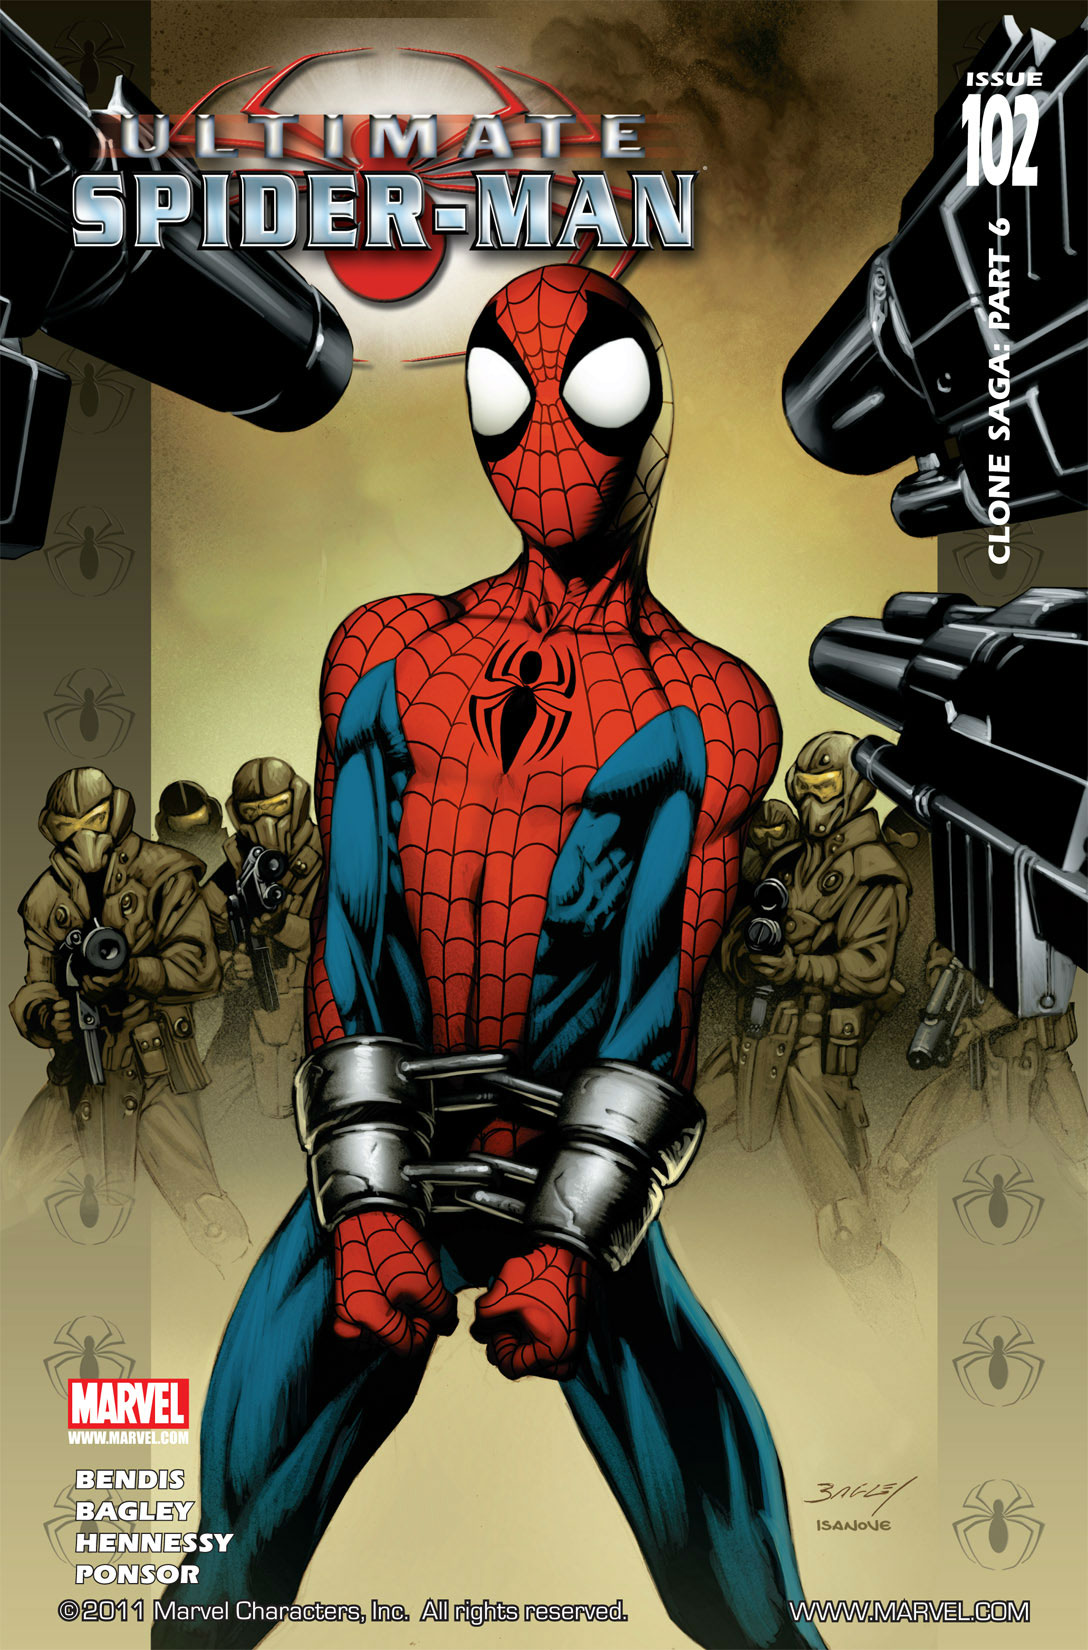 download spider man ultimate